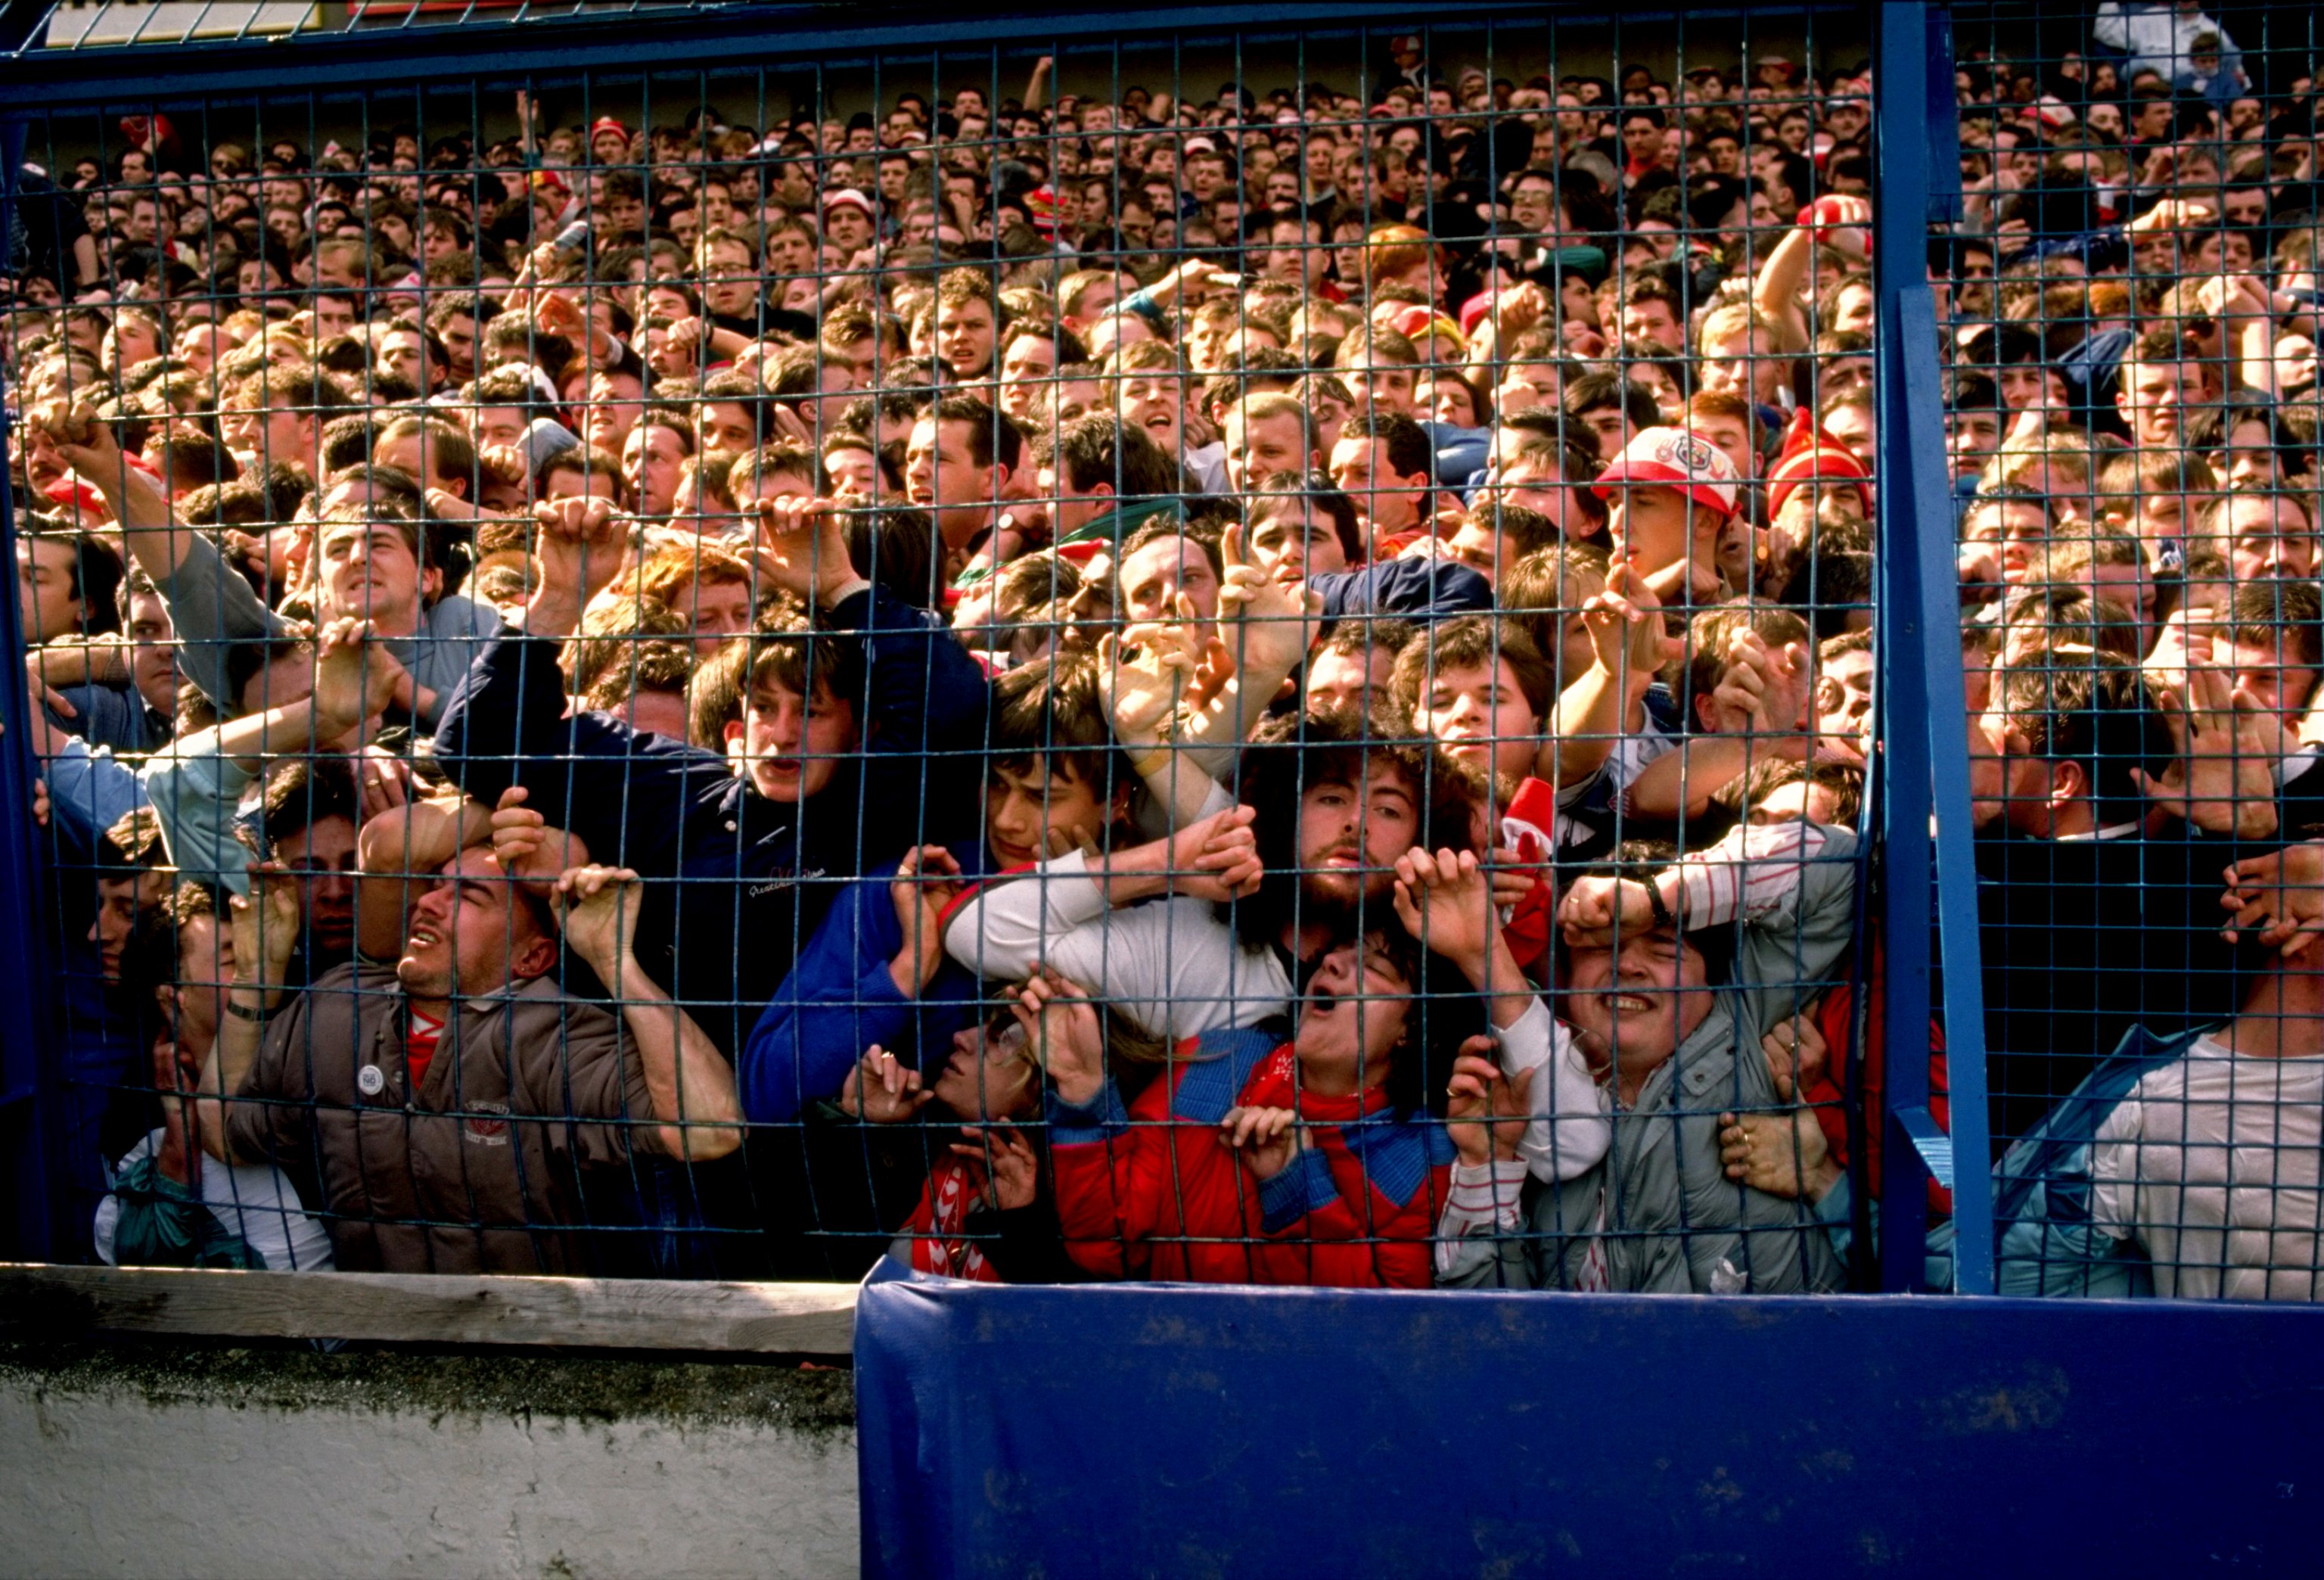 15 апреля 2016. Стадион Хиллсборо в Шеффилде, 1989. Стадион Хиллсборо Шеффилд. Давка на стадионе Хиллсборо в Шеффилде 1989. 15 Апреля 1989 года на стадионе Хиллсборо в Англии.